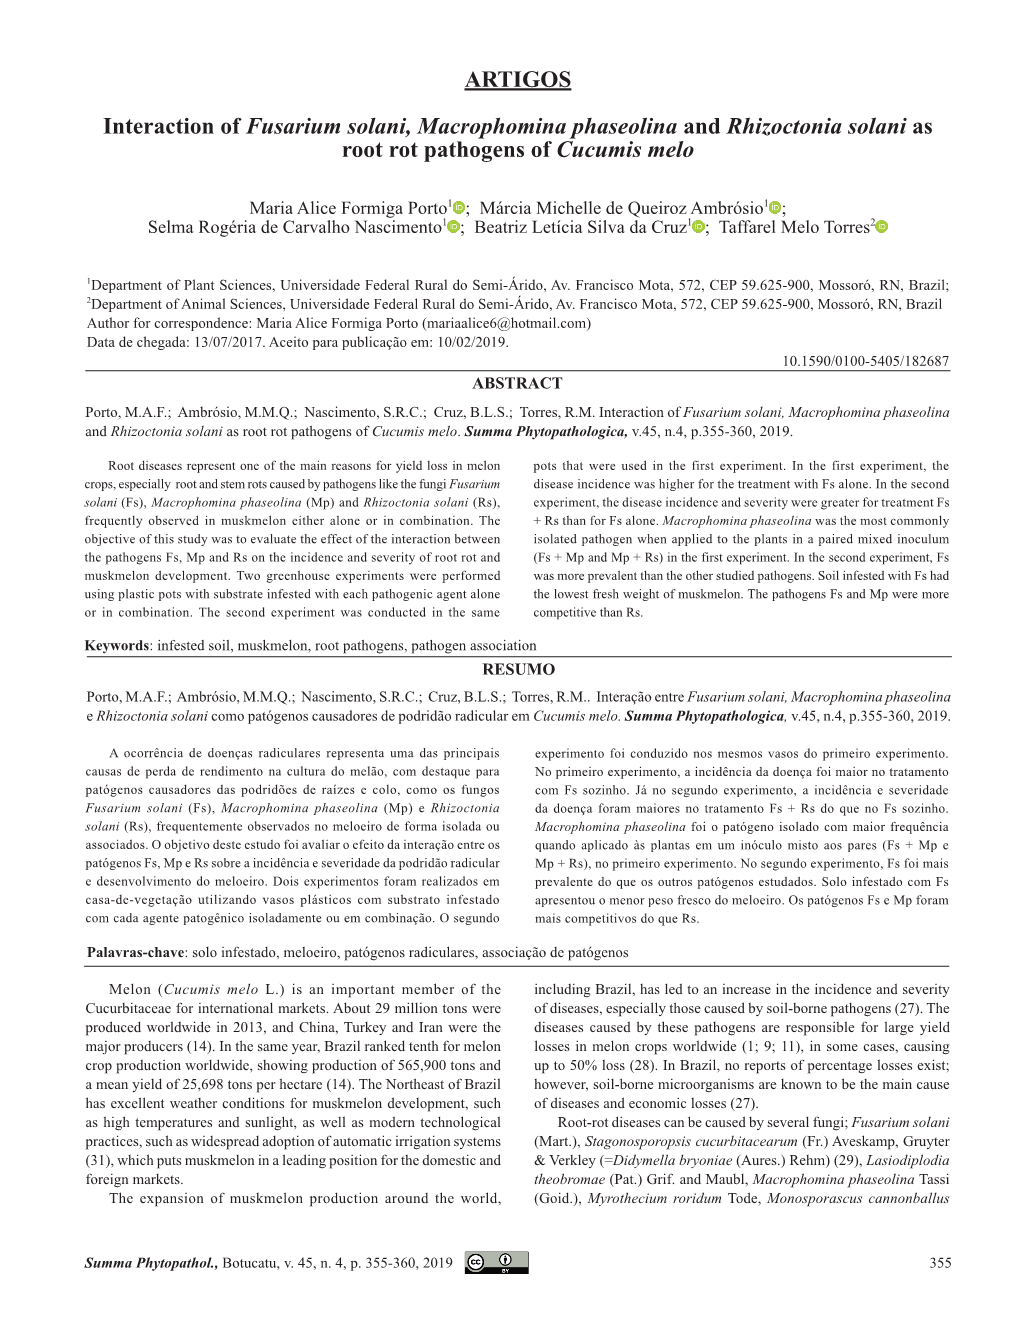 ARTIGOS Interaction of Fusarium Solani, Macrophomina Phaseolina and Rhizoctonia Solani As Root Rot Pathogens of Cucumis Melo